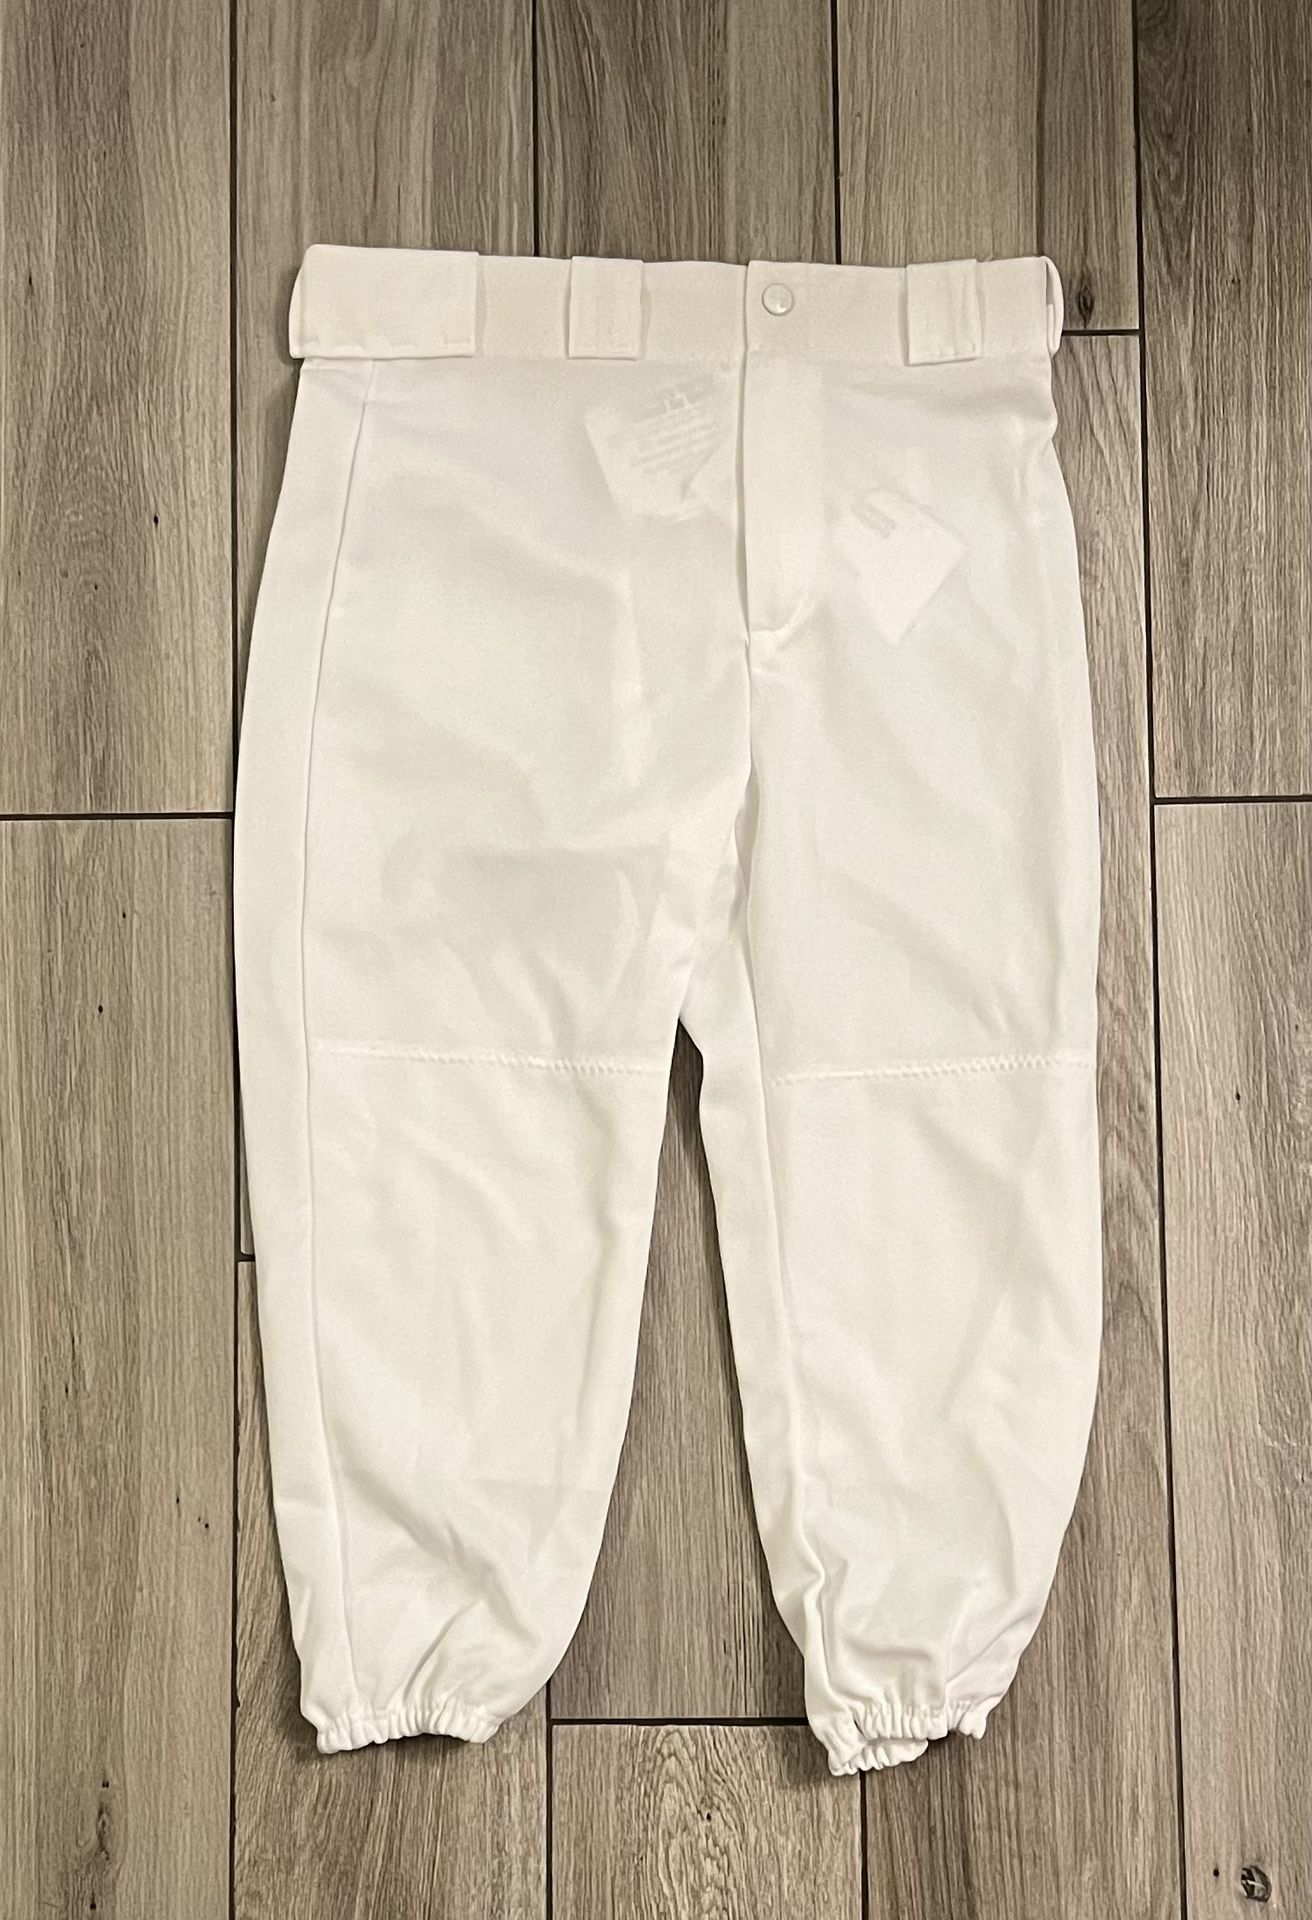 Bike Athletic Style 3708 White Youth Baseball Pants w/Belt Loops Size Large NEW